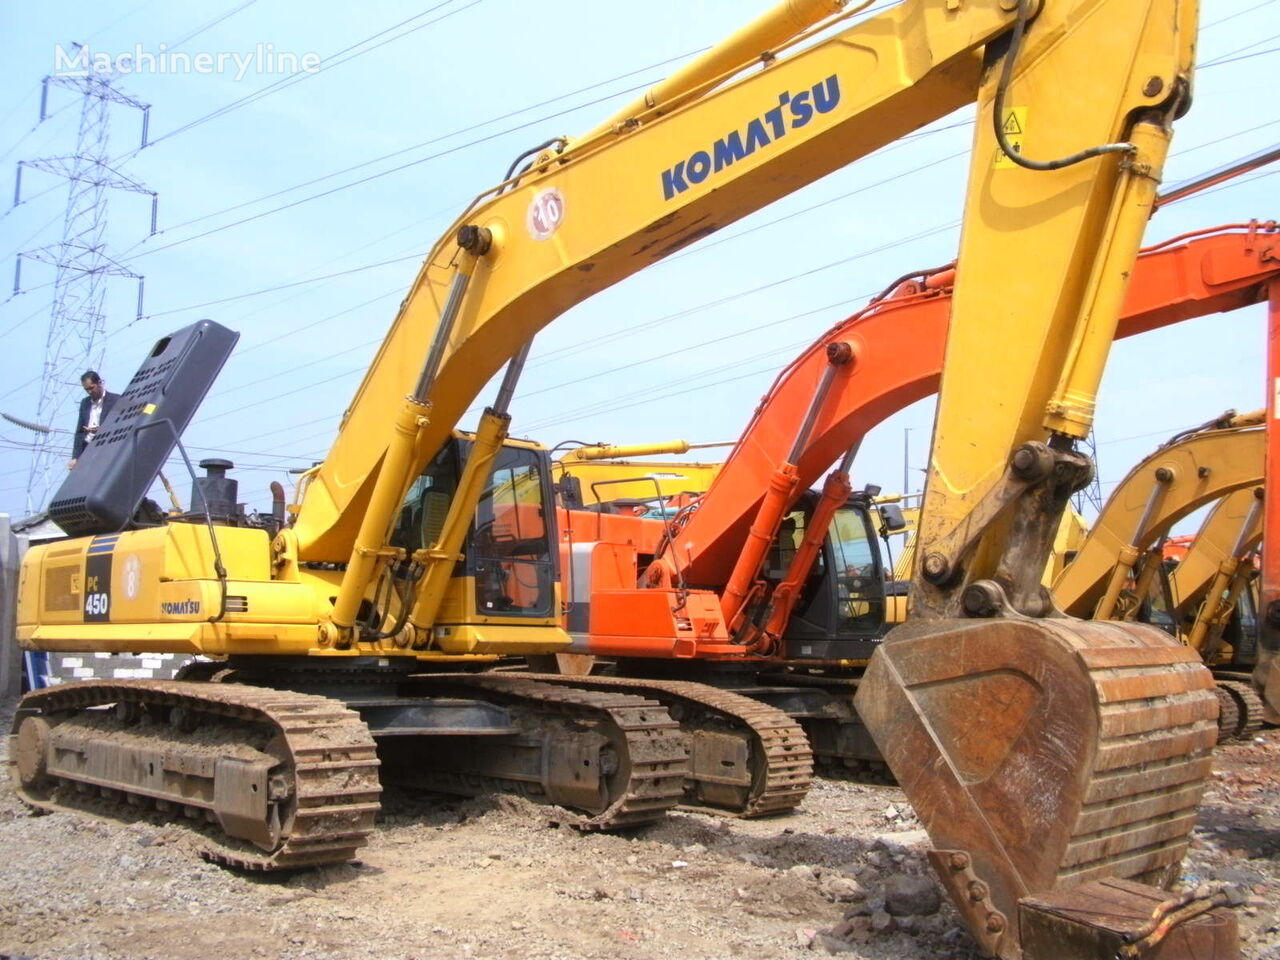 Komatsu PC450-7 tracked excavator